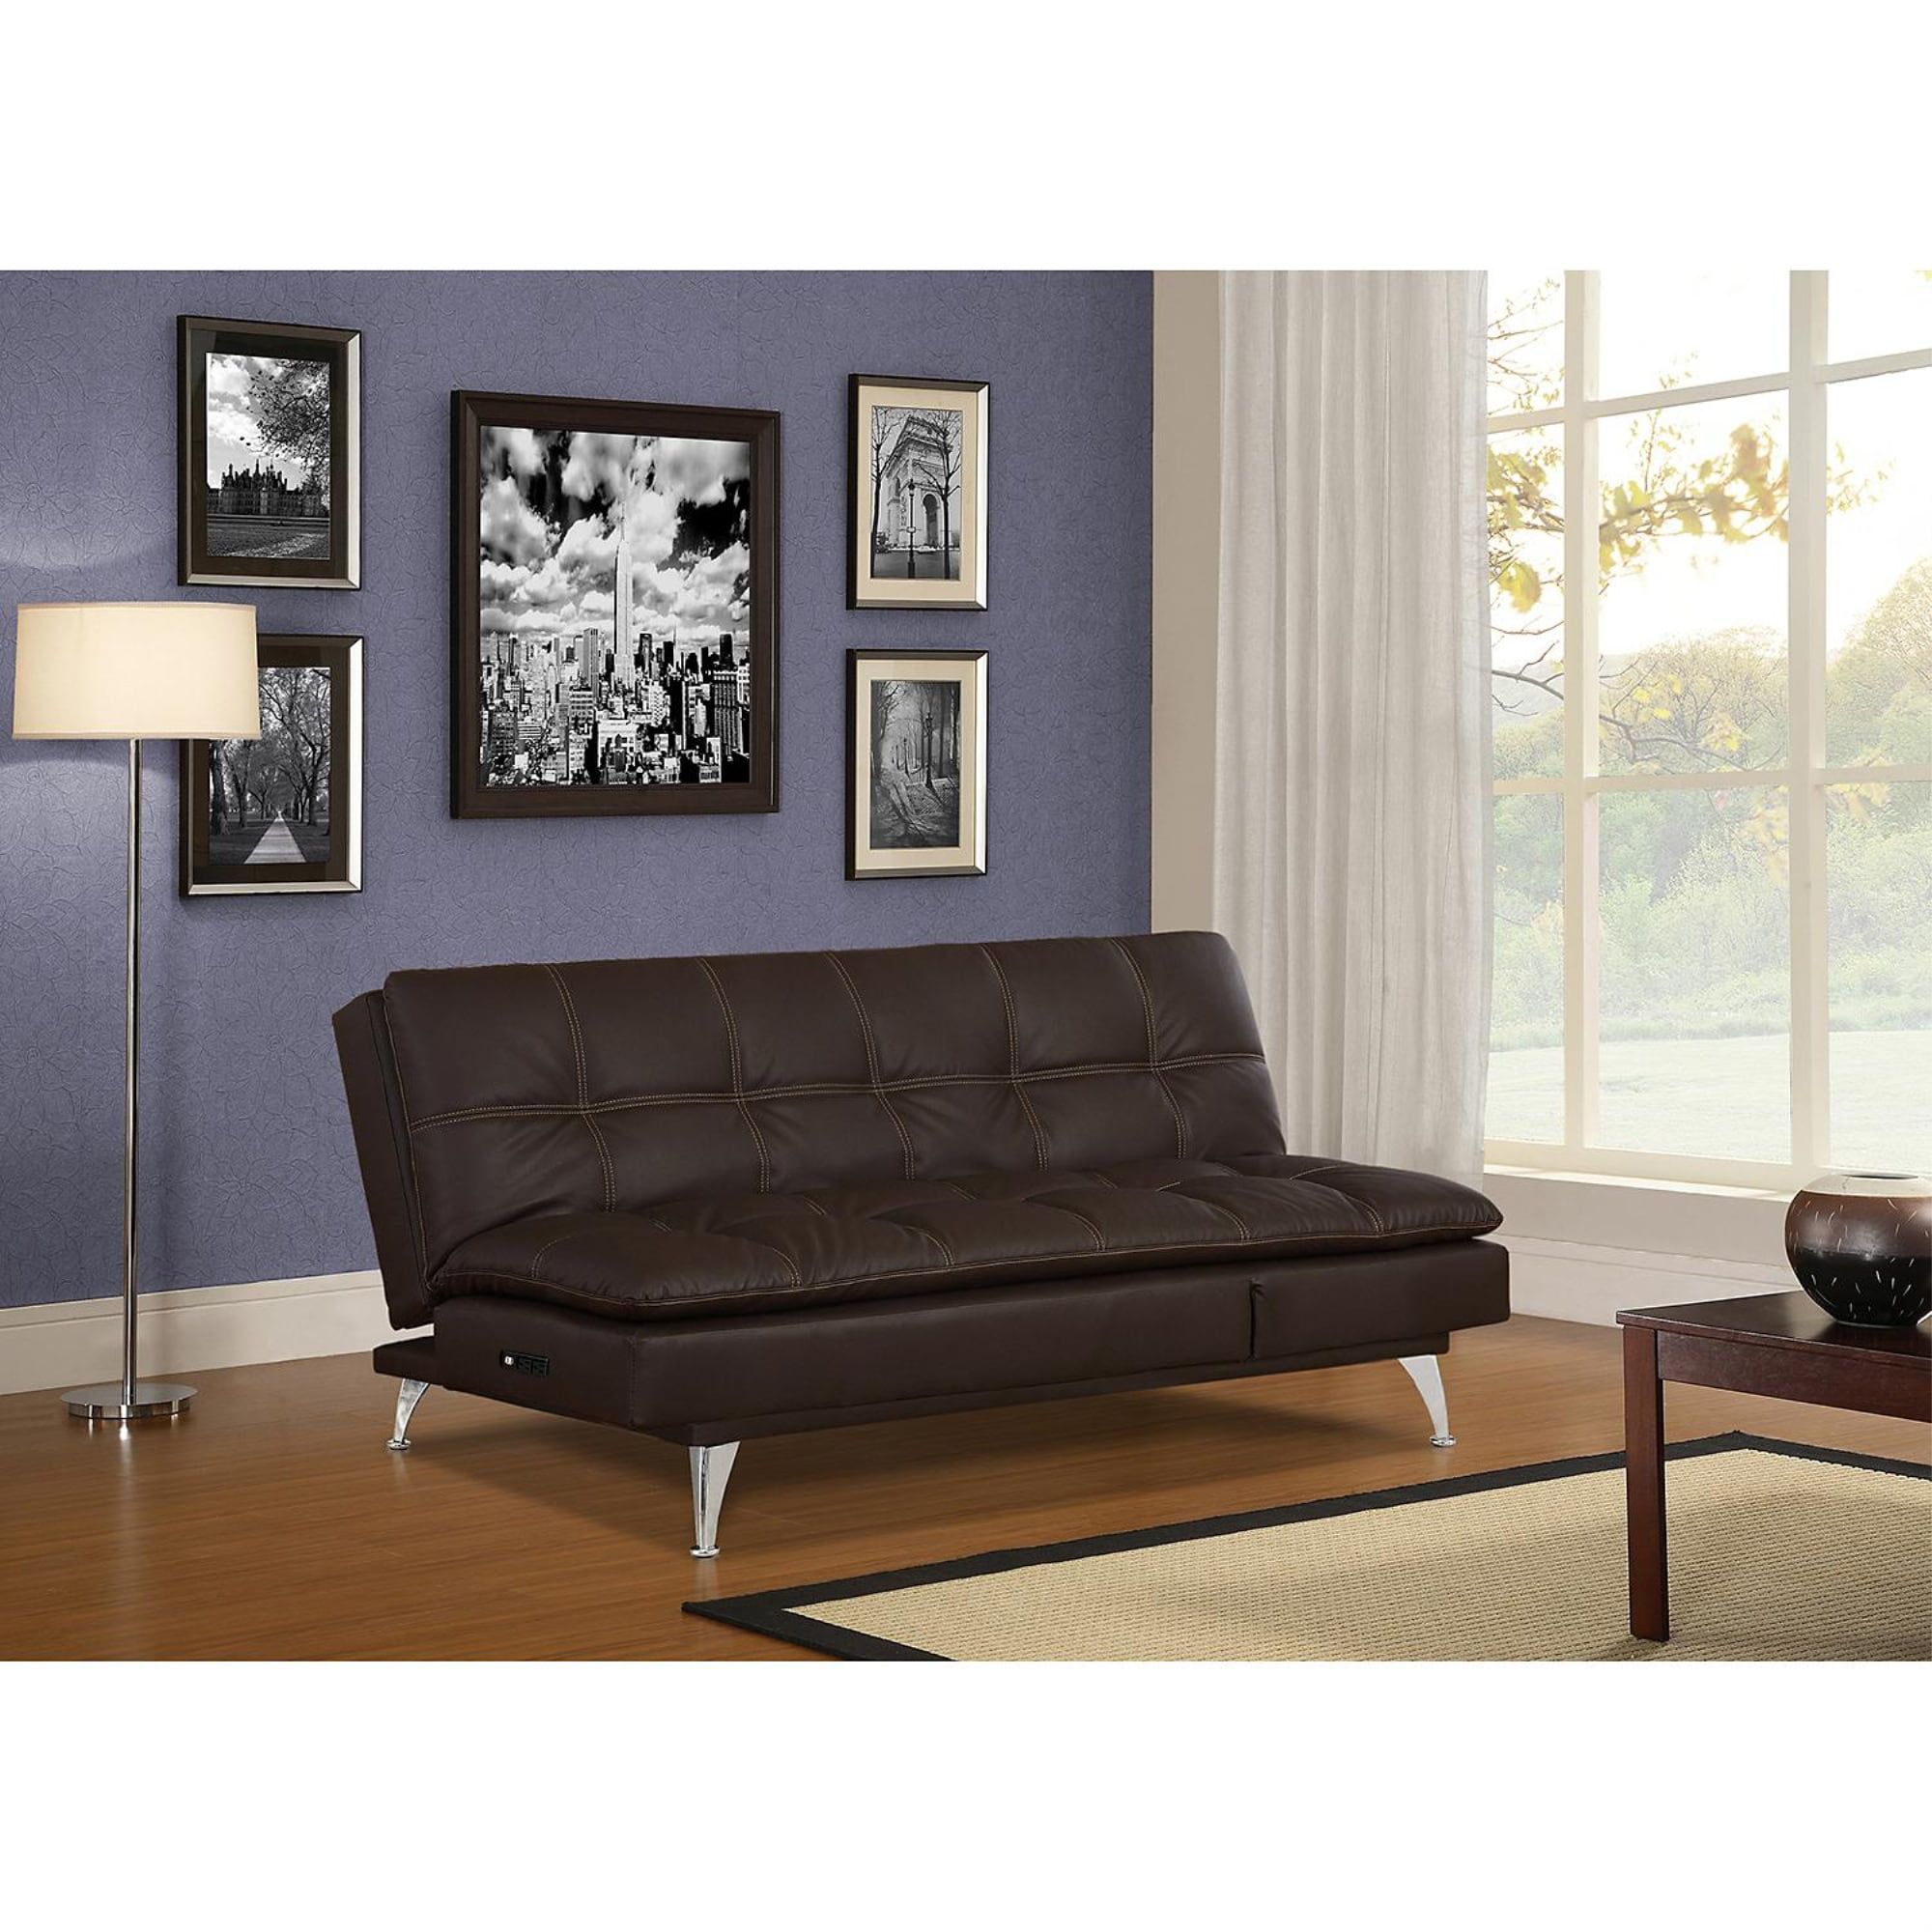 Serta Convertible Sofa Morgan | Baci Living Room Intended For 8 Seat Convertible Sofas (View 4 of 20)